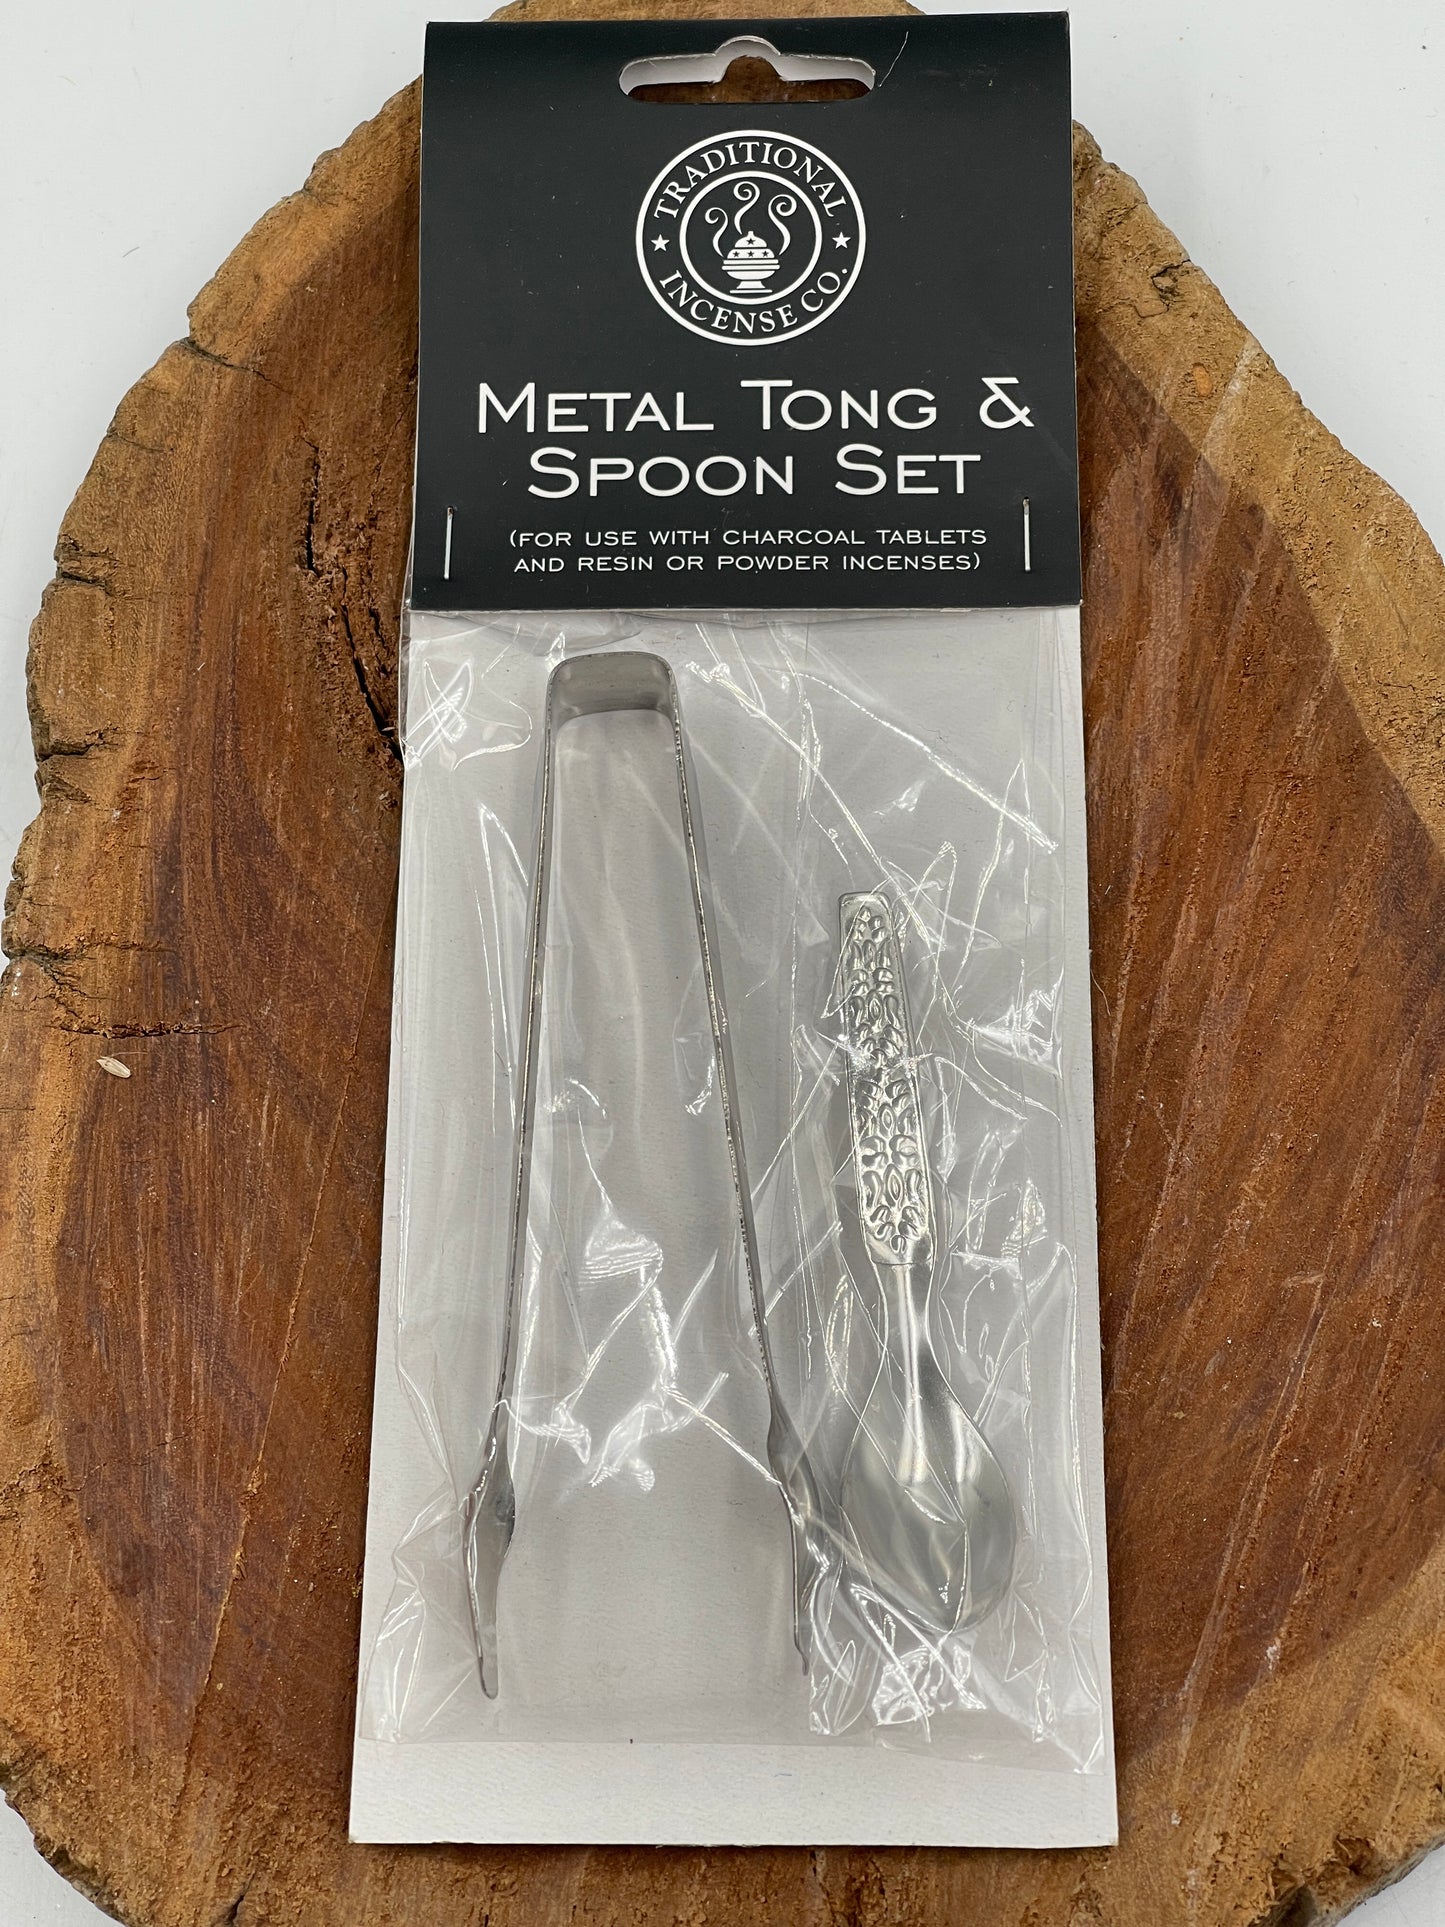 Metal Tong & Spoon Set